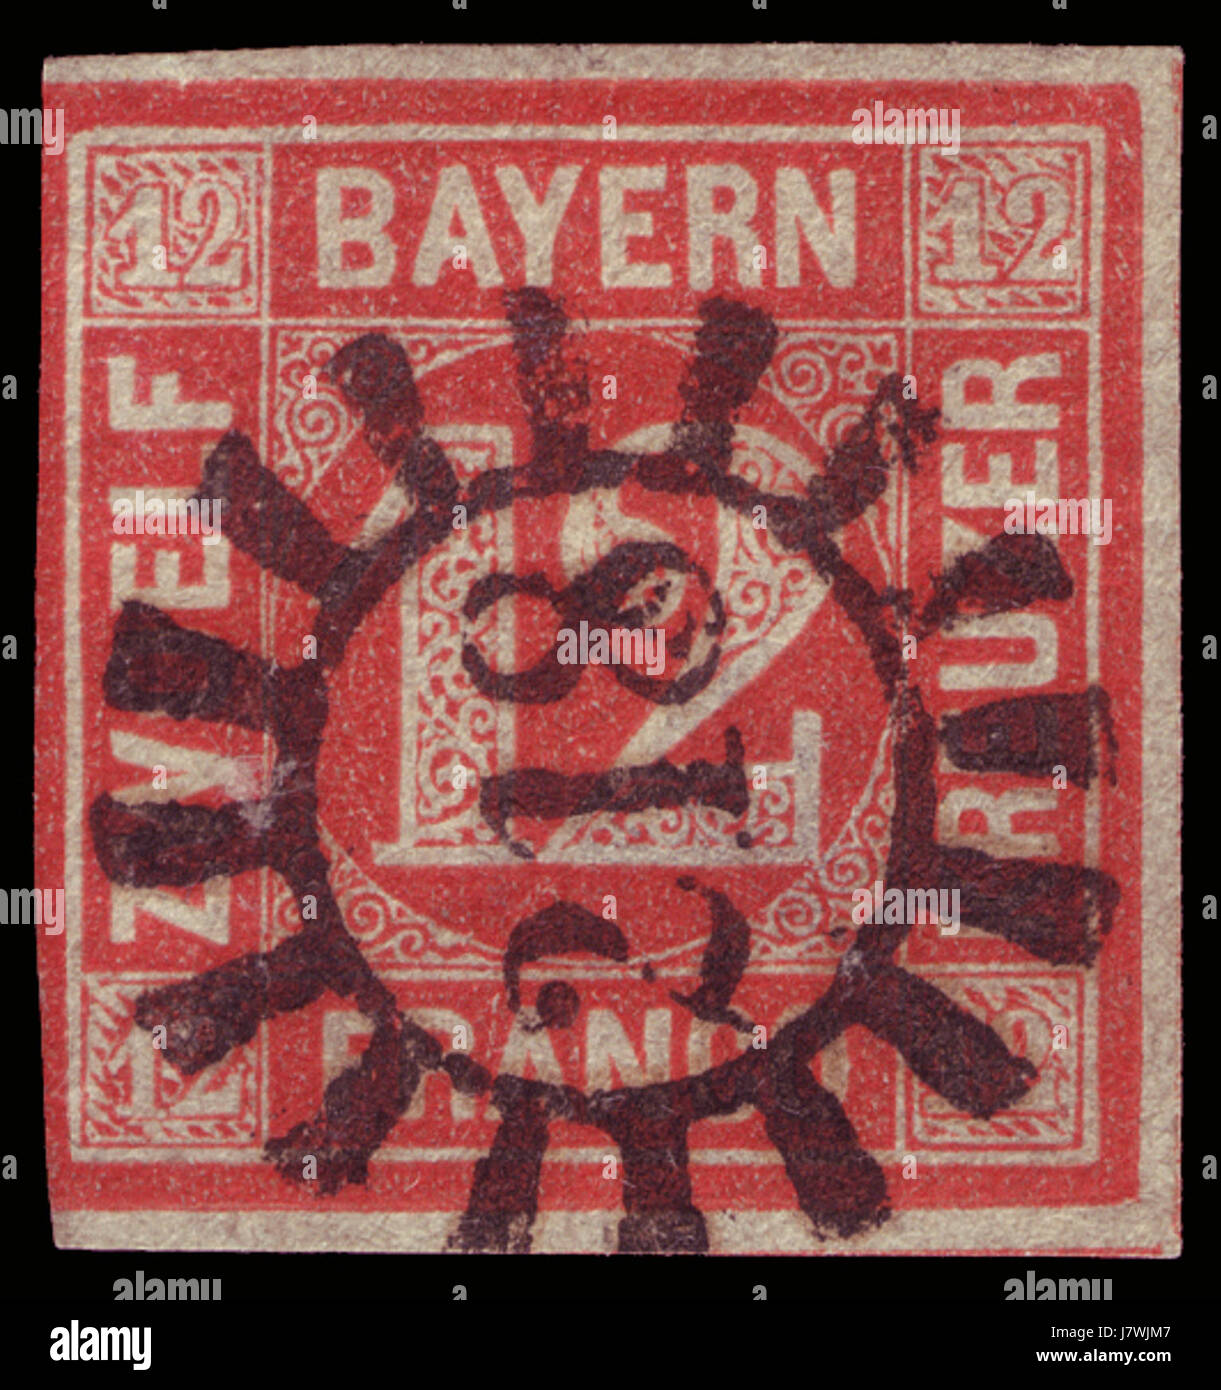 FC Bayern 1858 6 12 Kreuzer Stockfoto